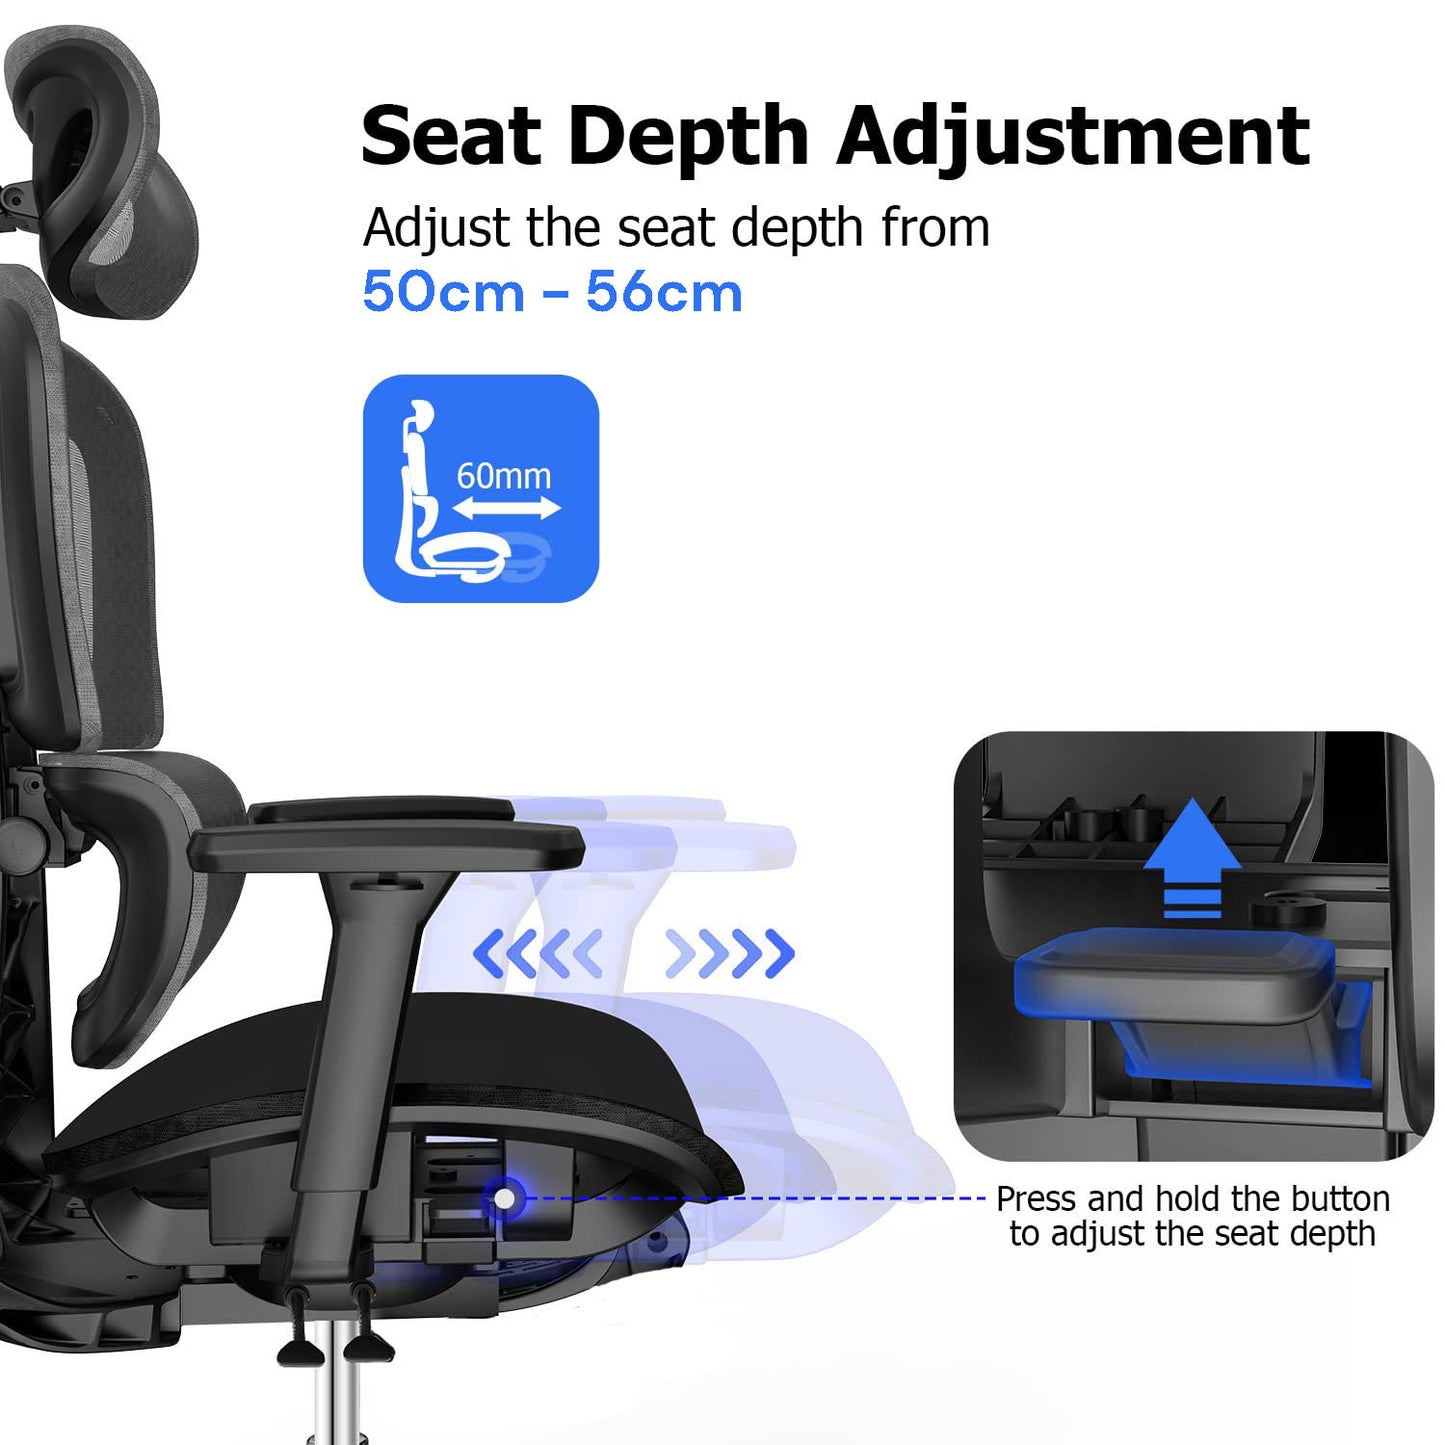 Ergonomic Mesh Home & Office Chair 3D Adjustable Armrest Seat High Back Desk Computer Chair